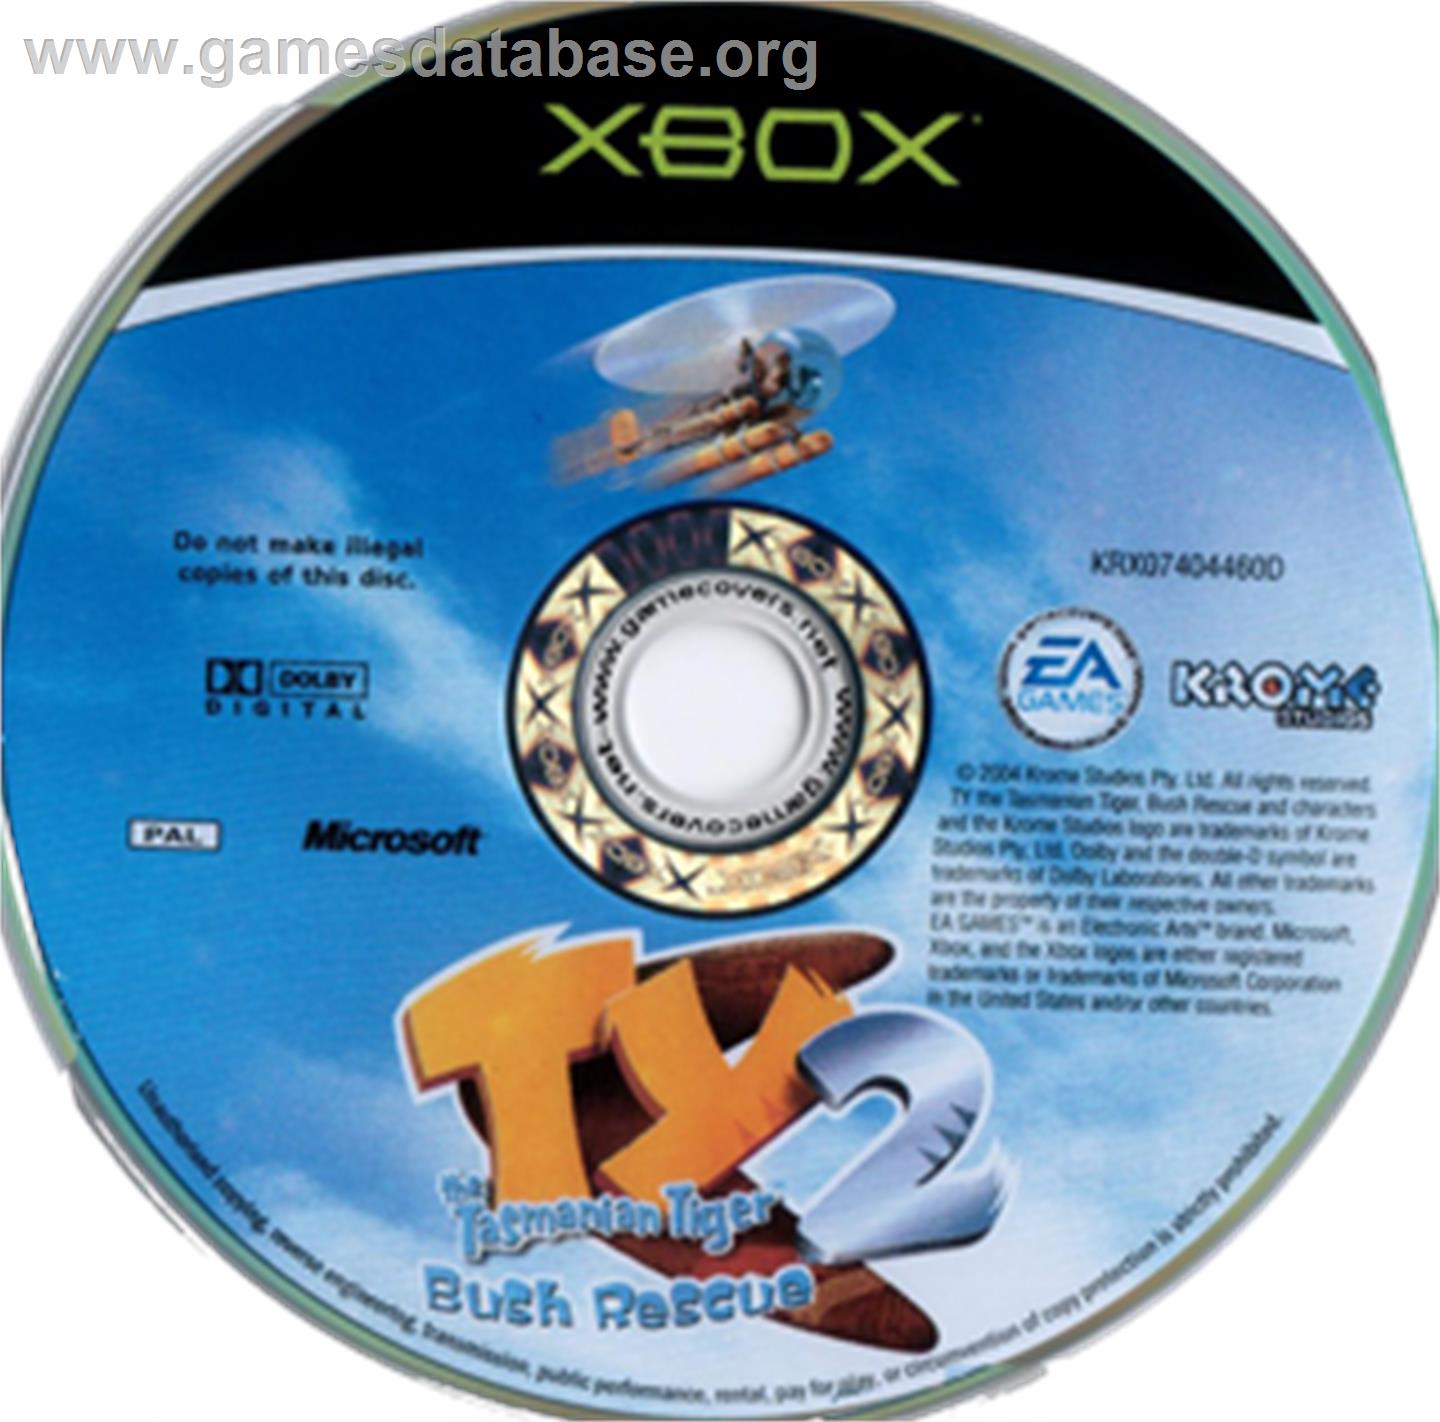 Ty the Tasmanian Tiger 2: Bush Rescue - Microsoft Xbox - Artwork - CD